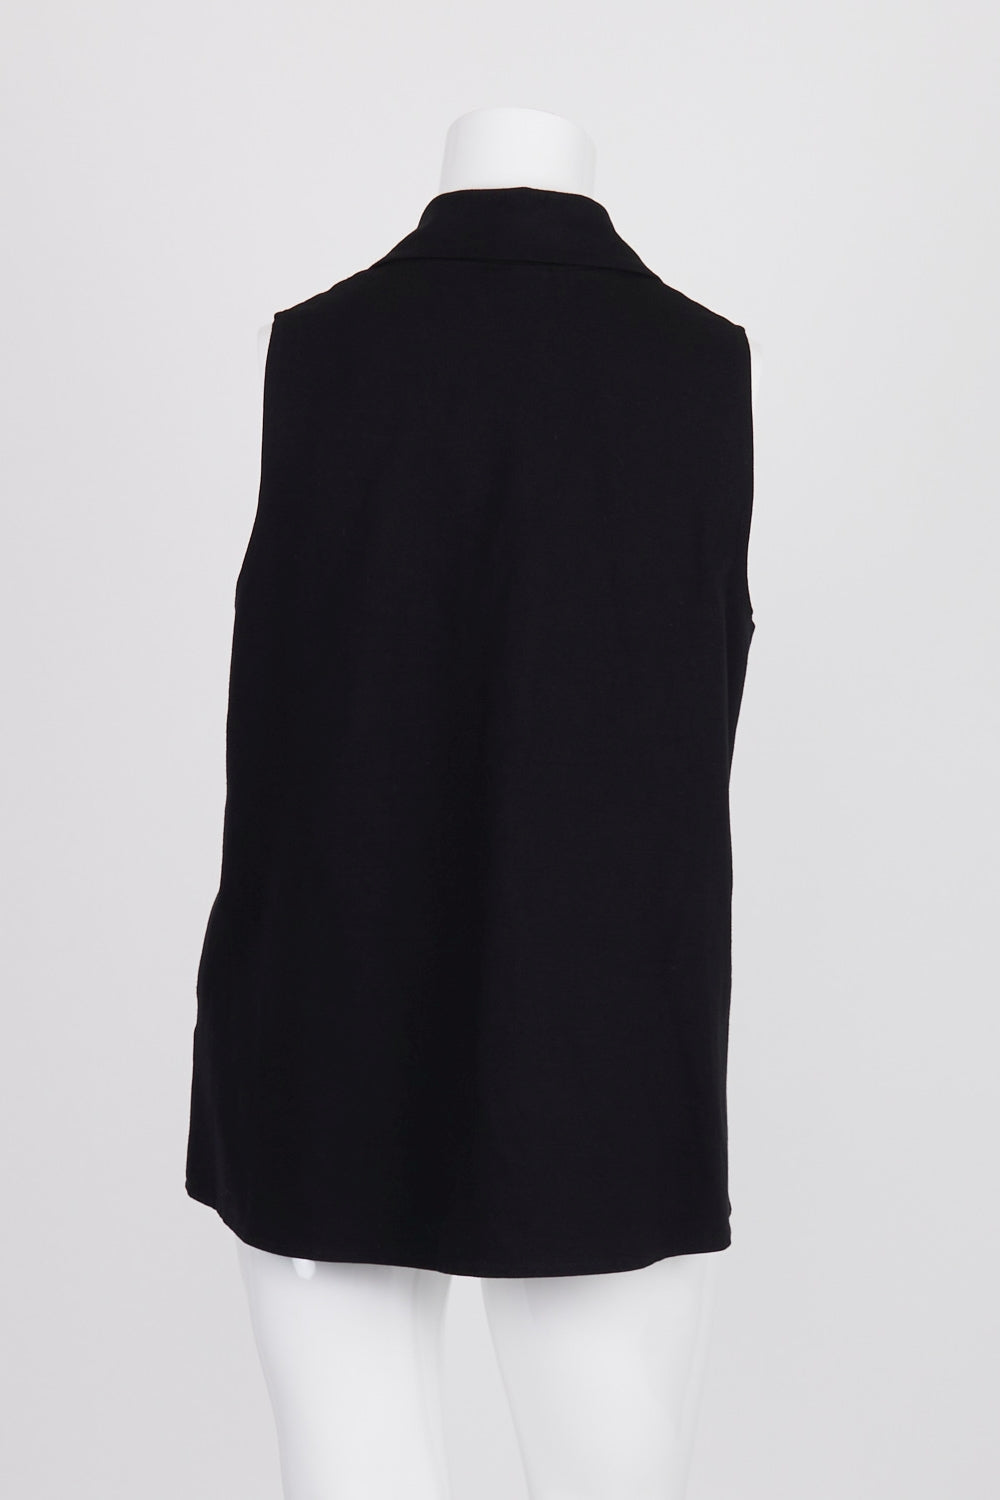 Jenny Scott Sorrento Black Zip Front Vest XL